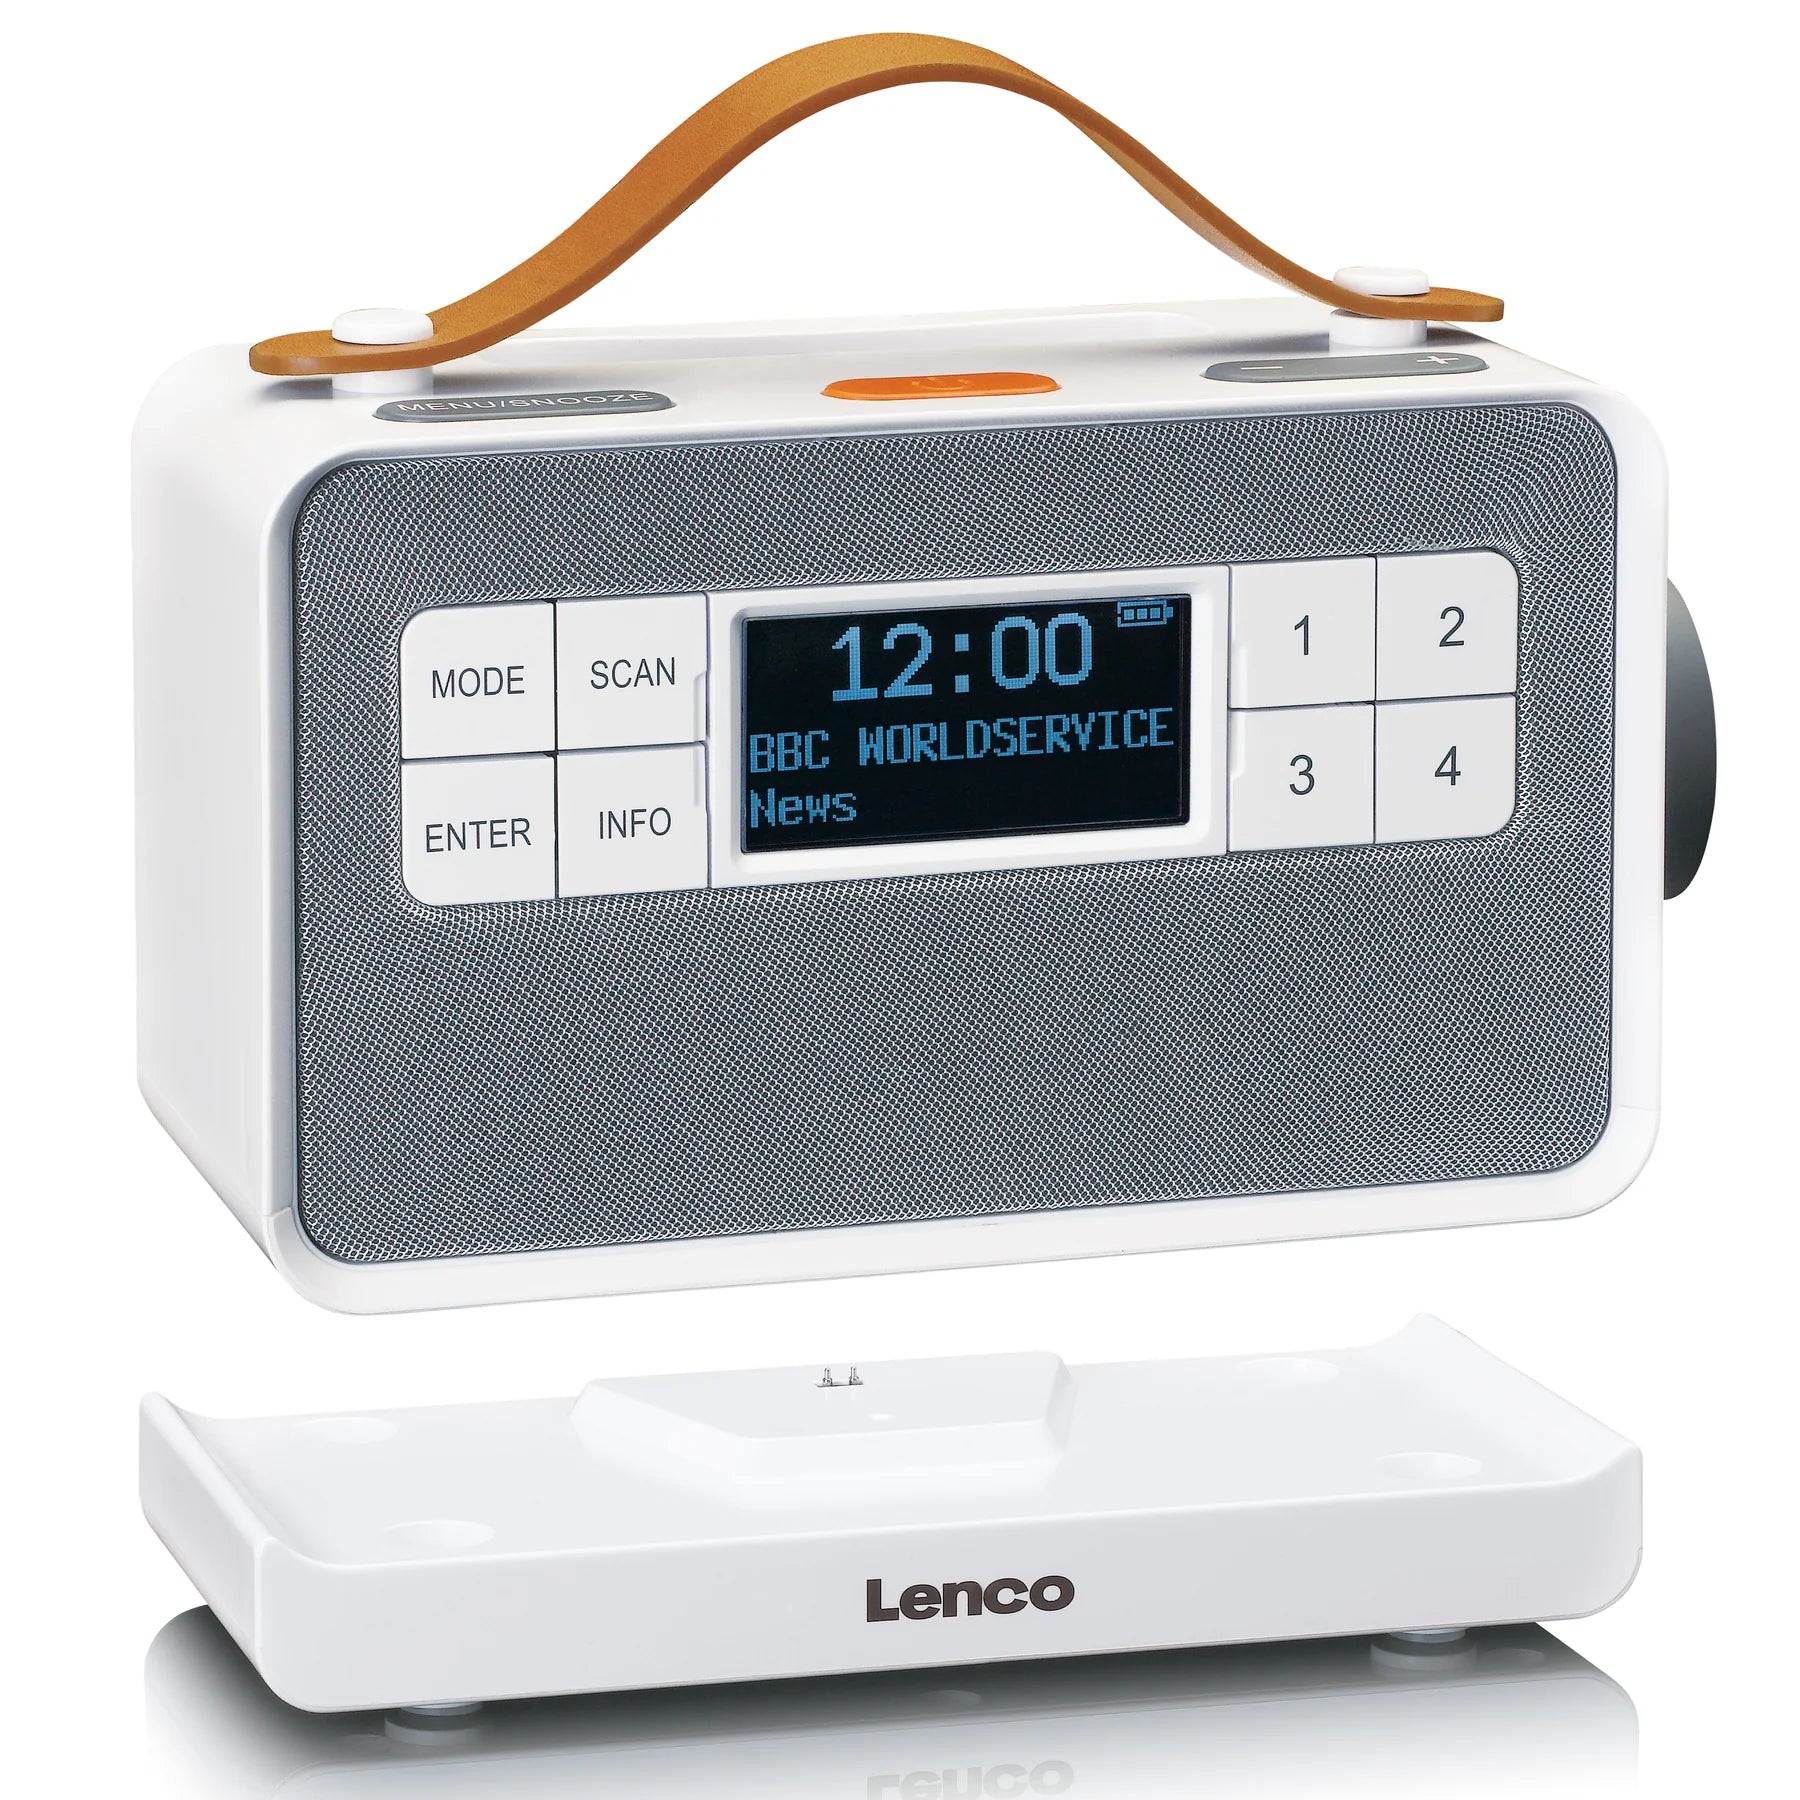 Lenco PDR-065WH- Eco DAB+ radio with Bluetooth® 5.0, White